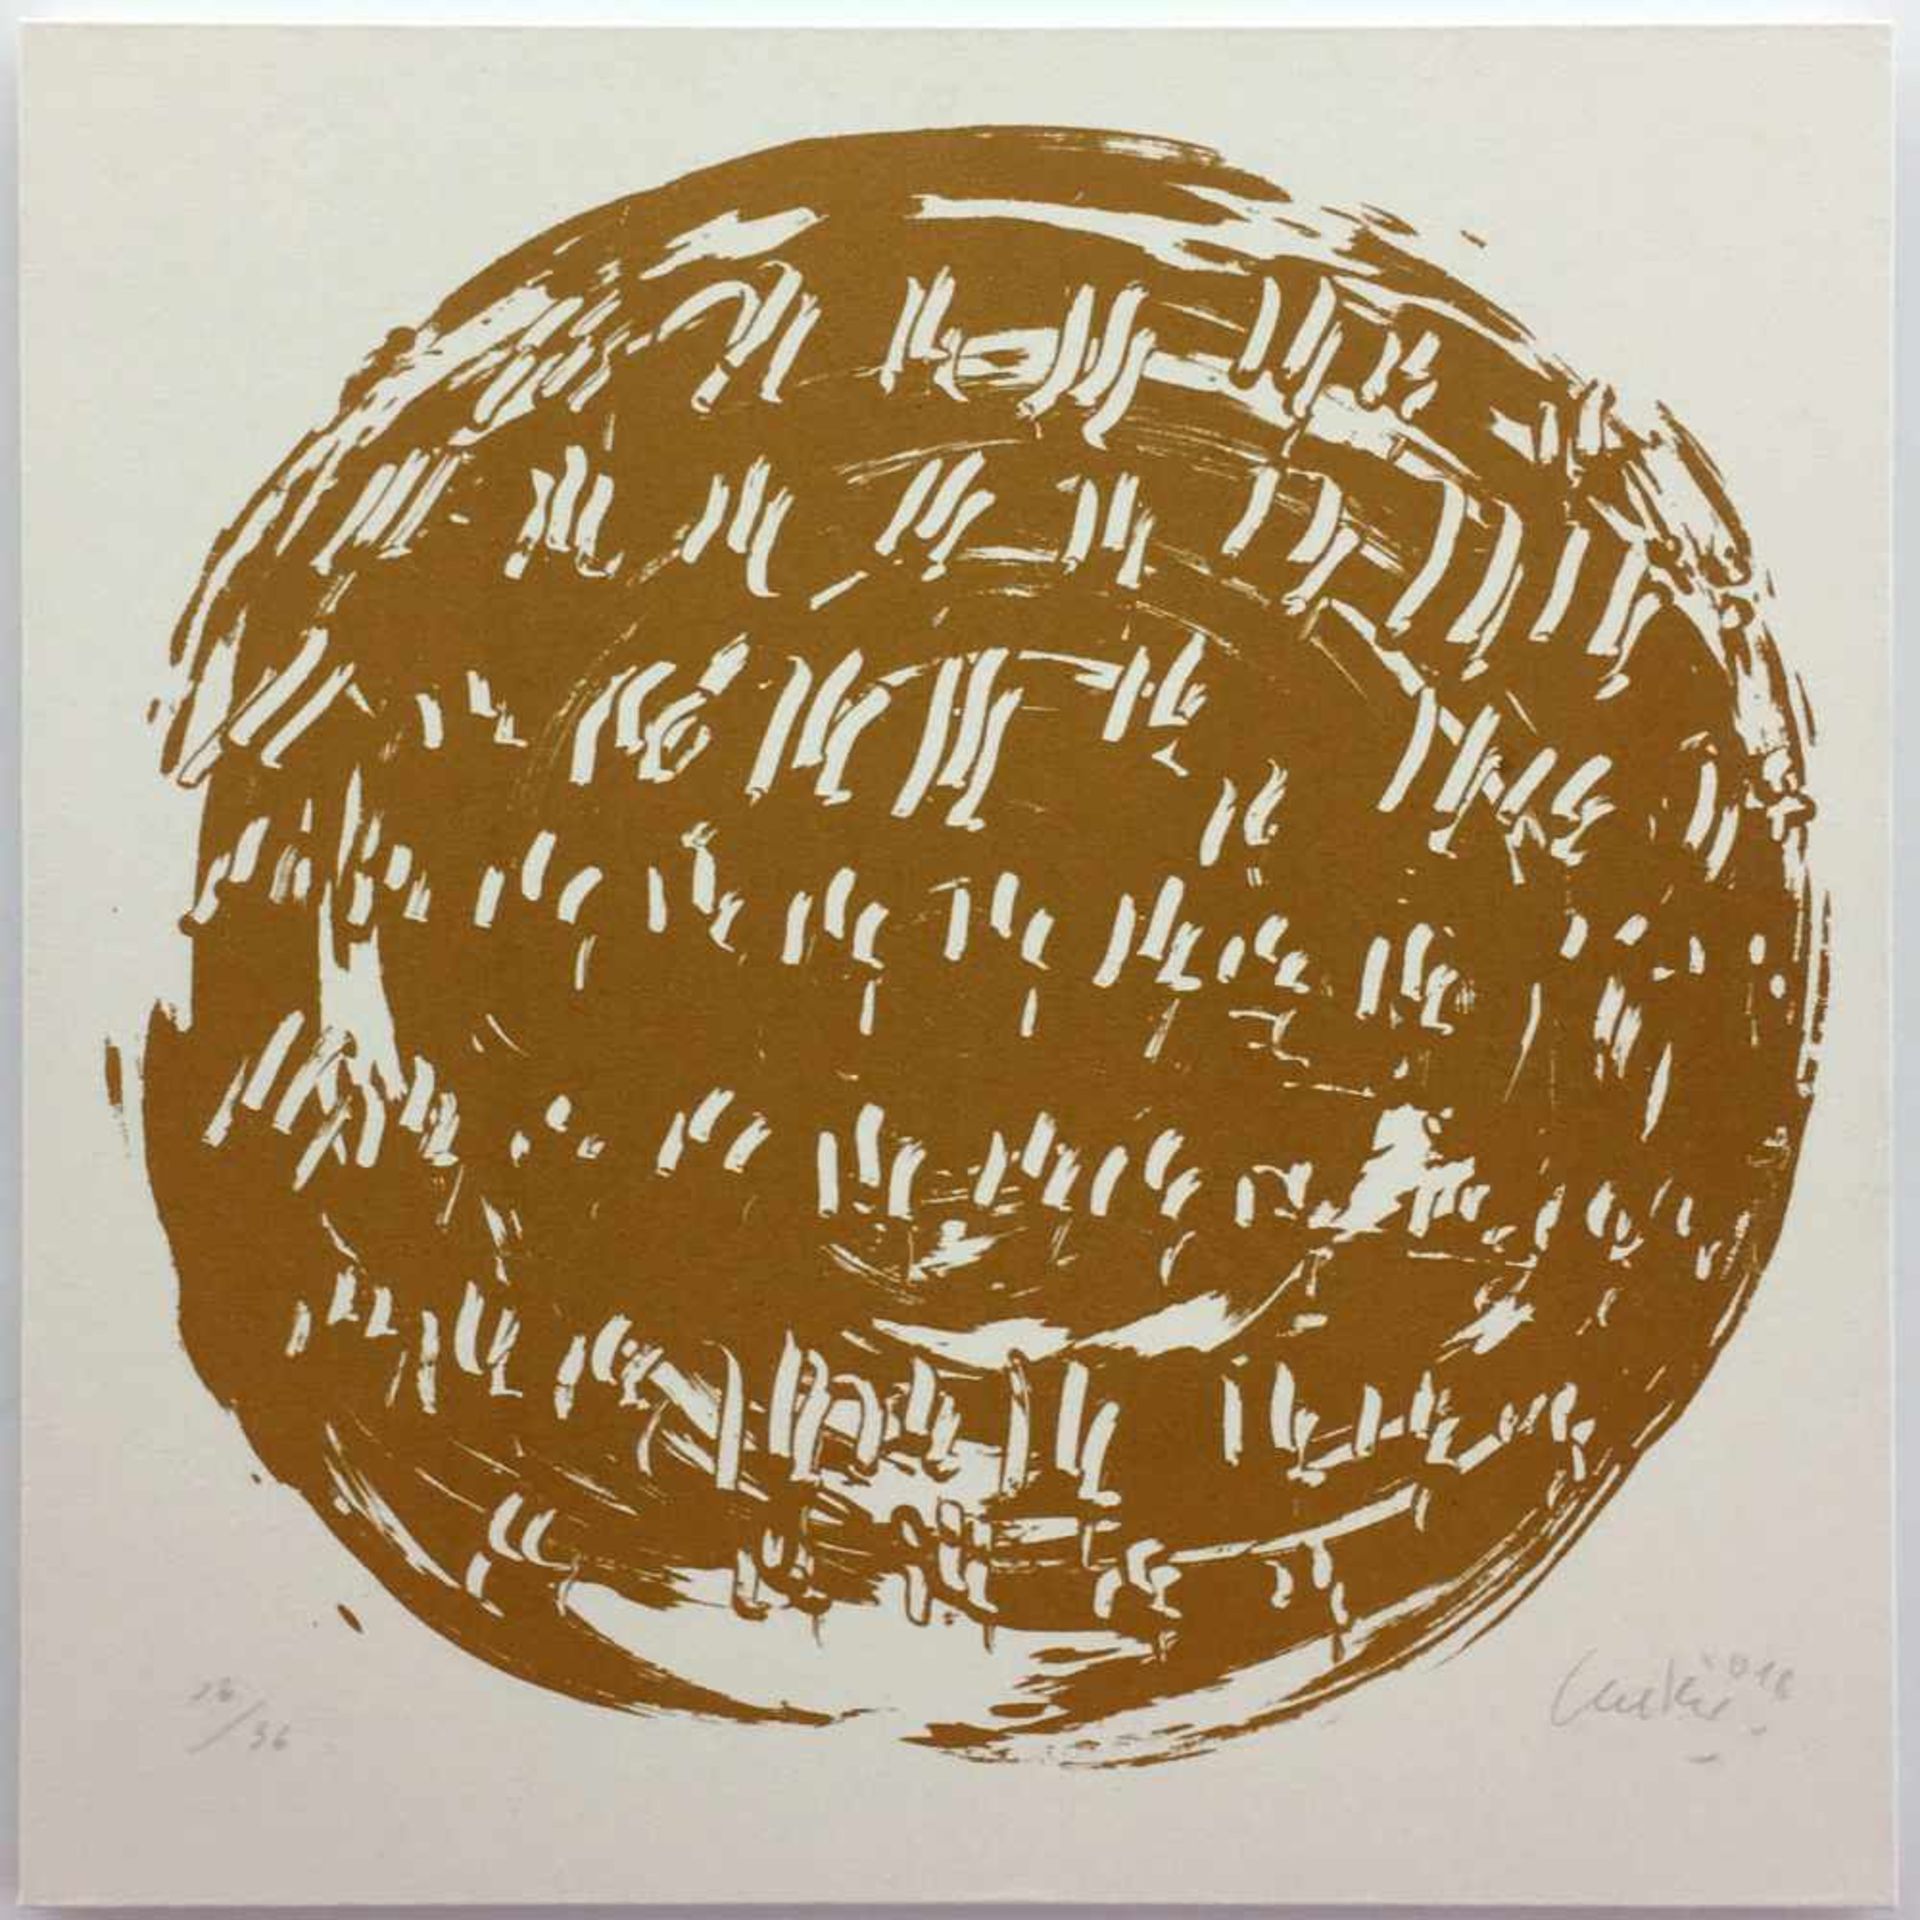 Gjemre, Frithjoht H. (1892 - 1972) "Badende am See", Öl auf Lw. 89,5 x 97 cm, rechts unten signiert,